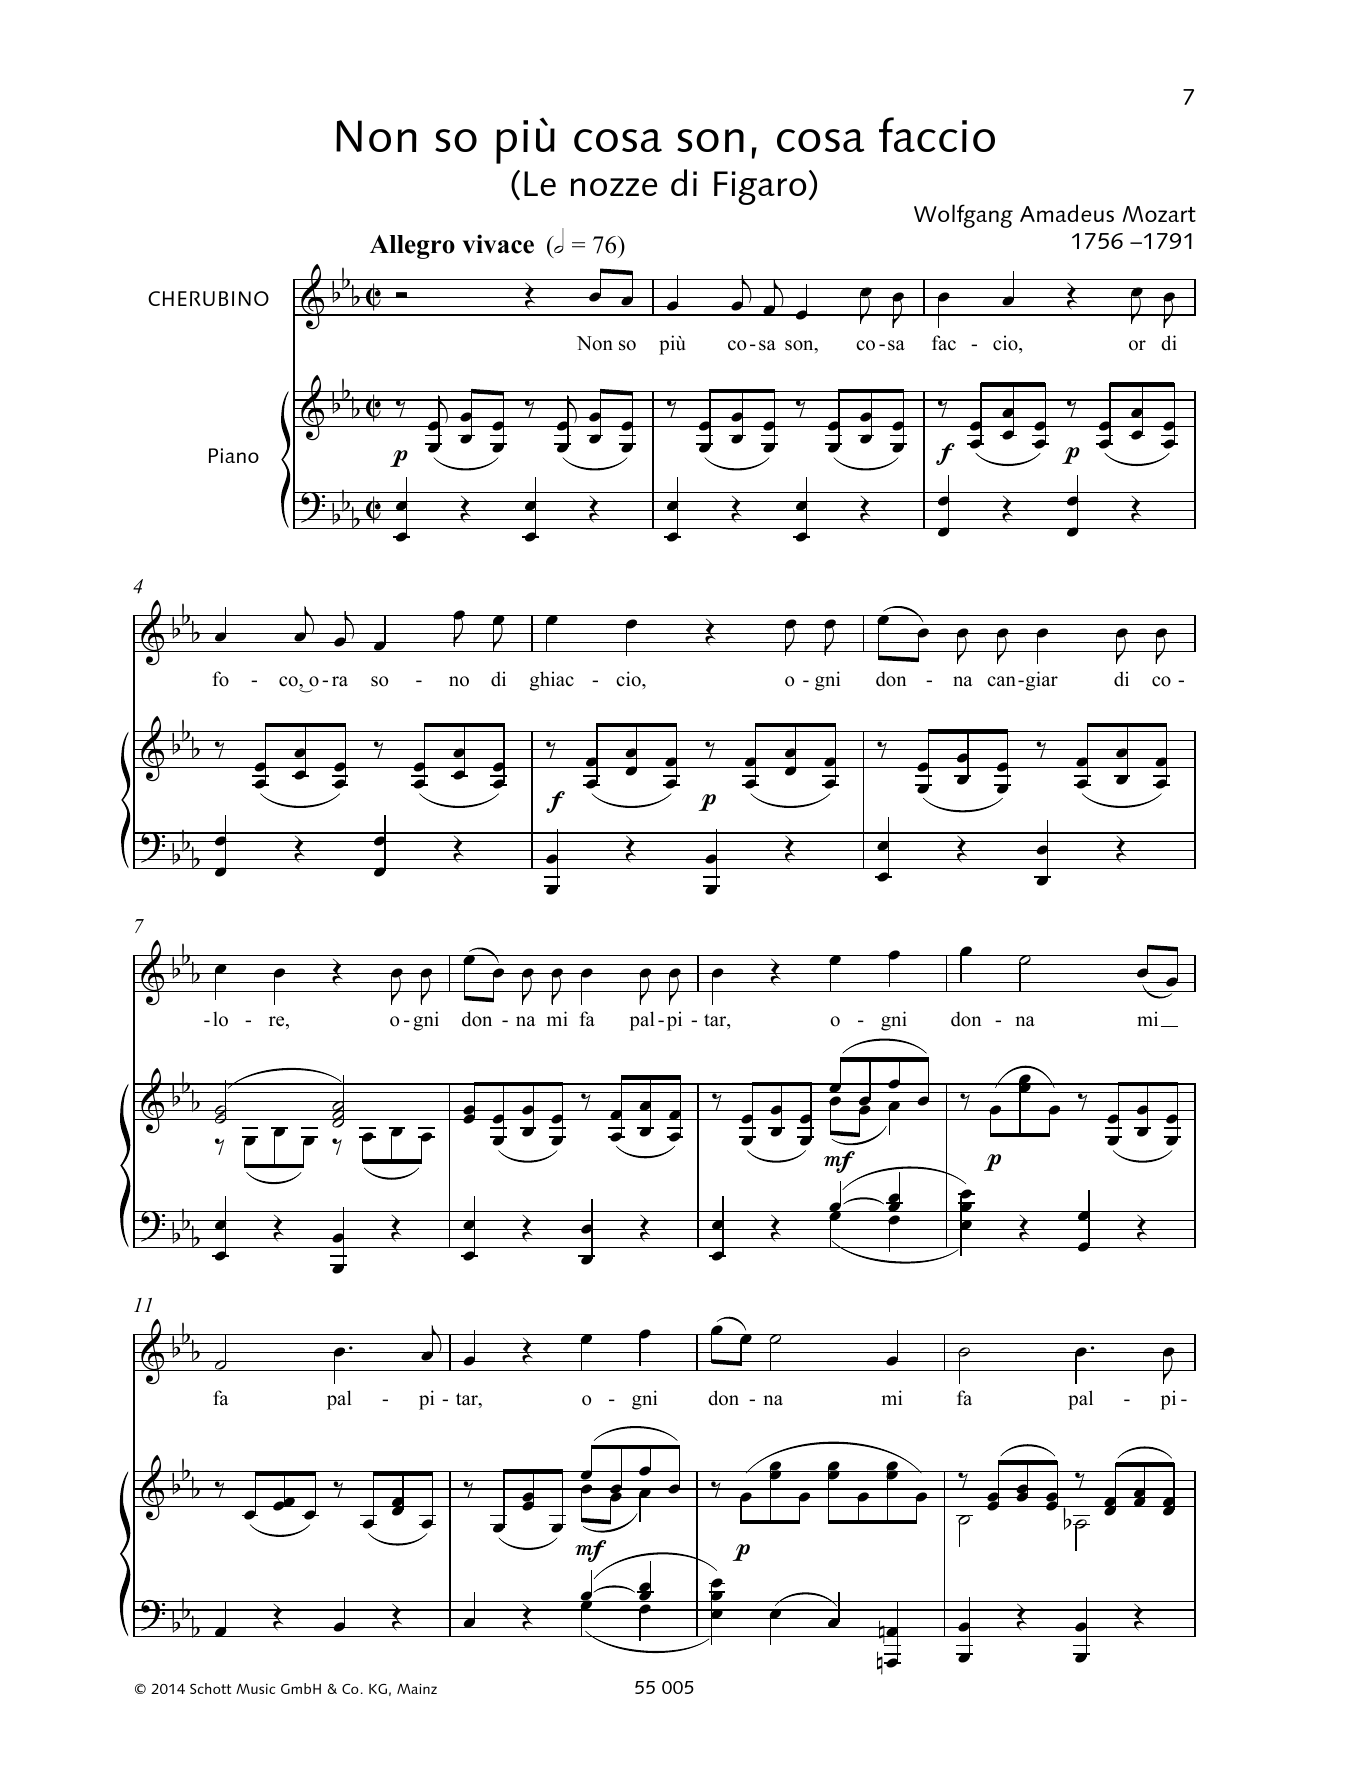 Wolfgang Amadeus Mozart Non so più cosa son, cosa faccio Sheet Music Notes & Chords for Piano & Vocal - Download or Print PDF